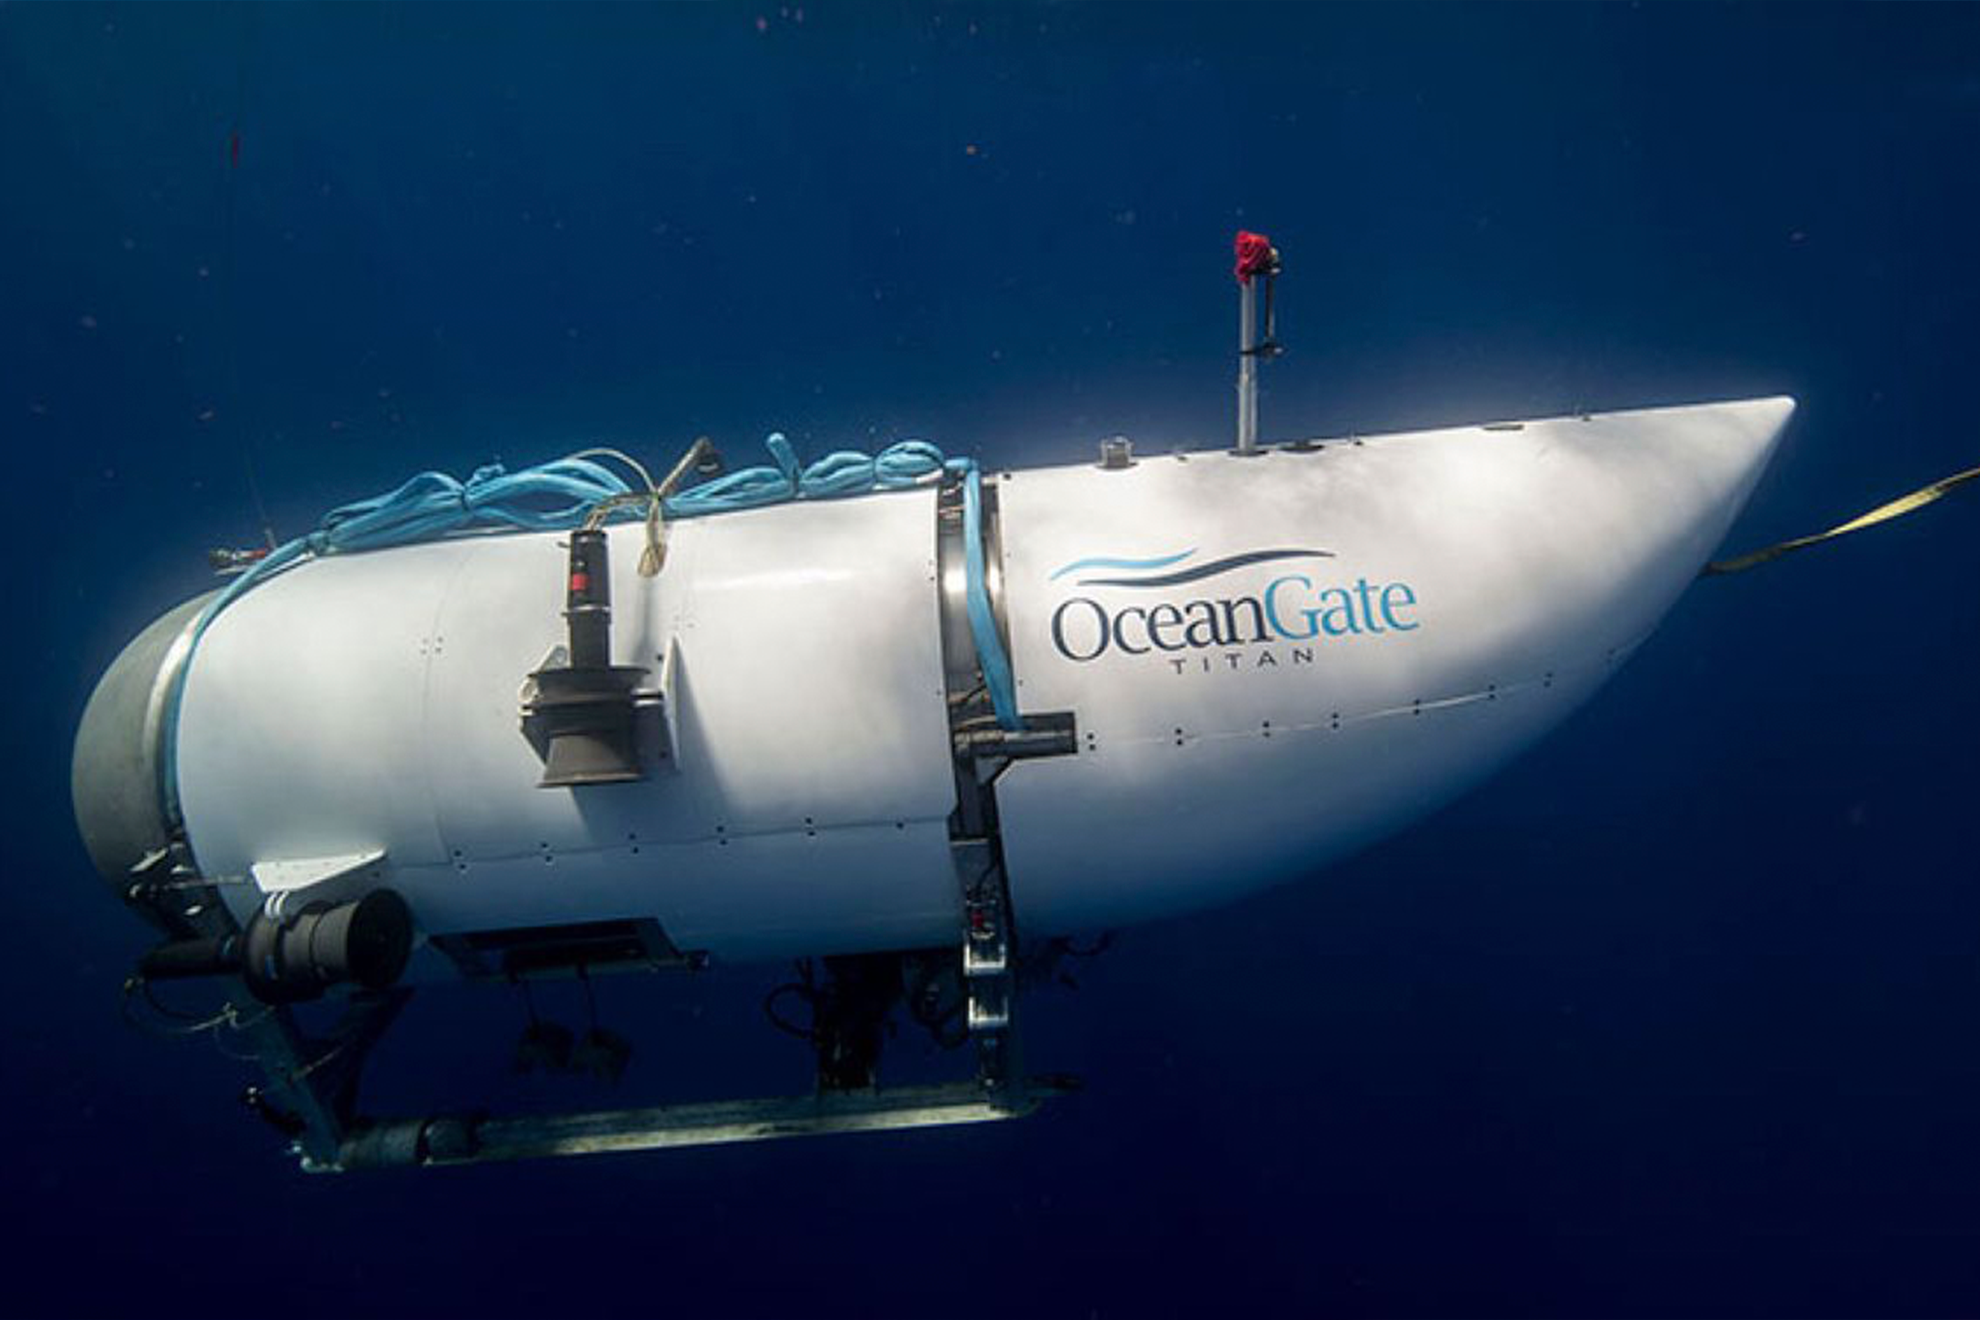 Mueren las 5 personas a bordo del Submarino Titn, confirma OceanGate